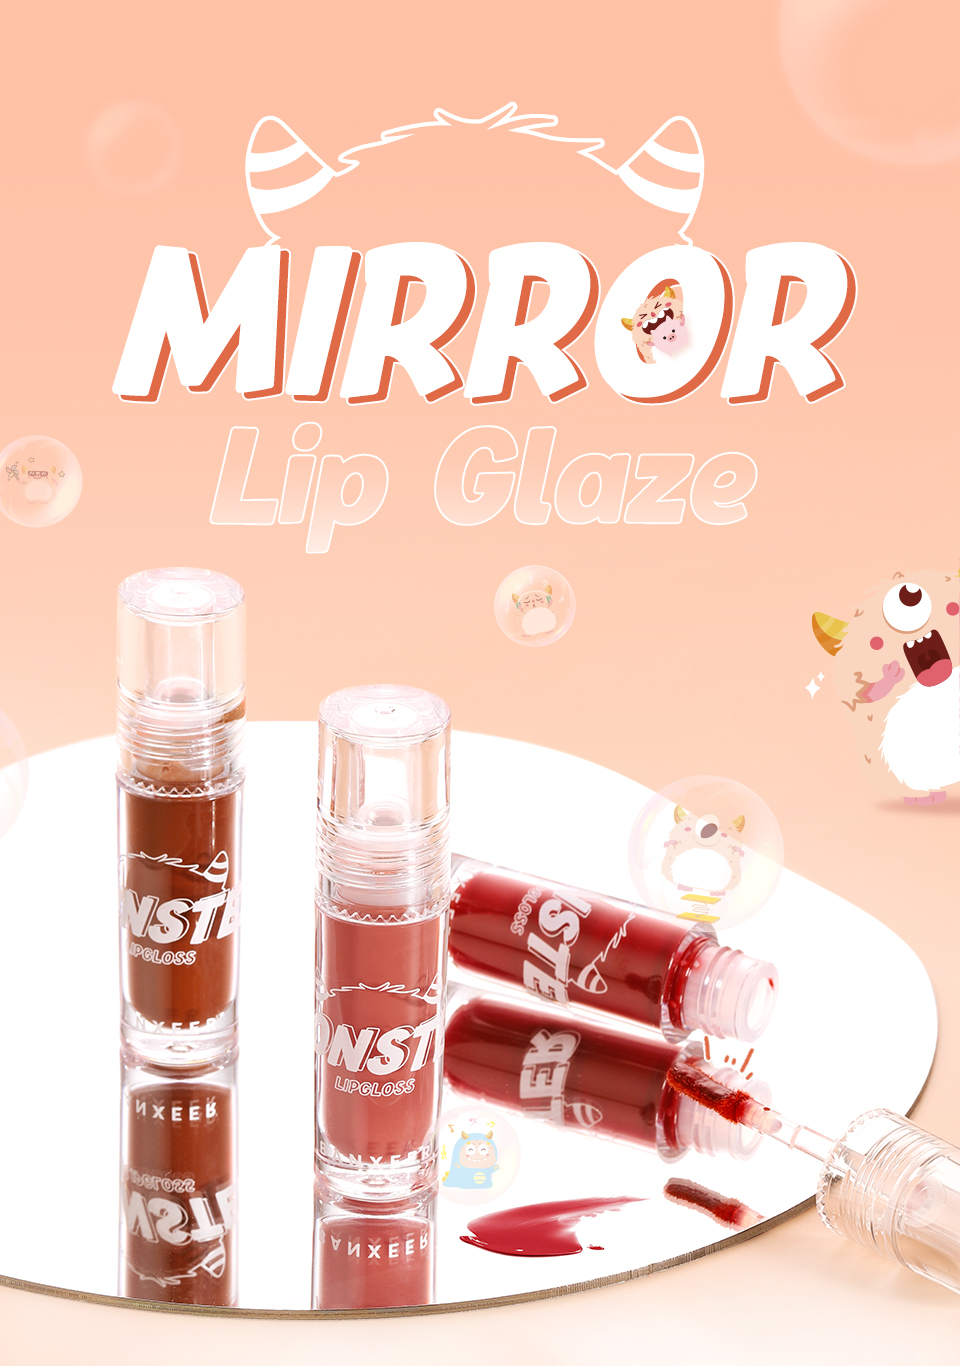 BANXEER Water Light Glossy Mirror Surface Lip Glaze BM09